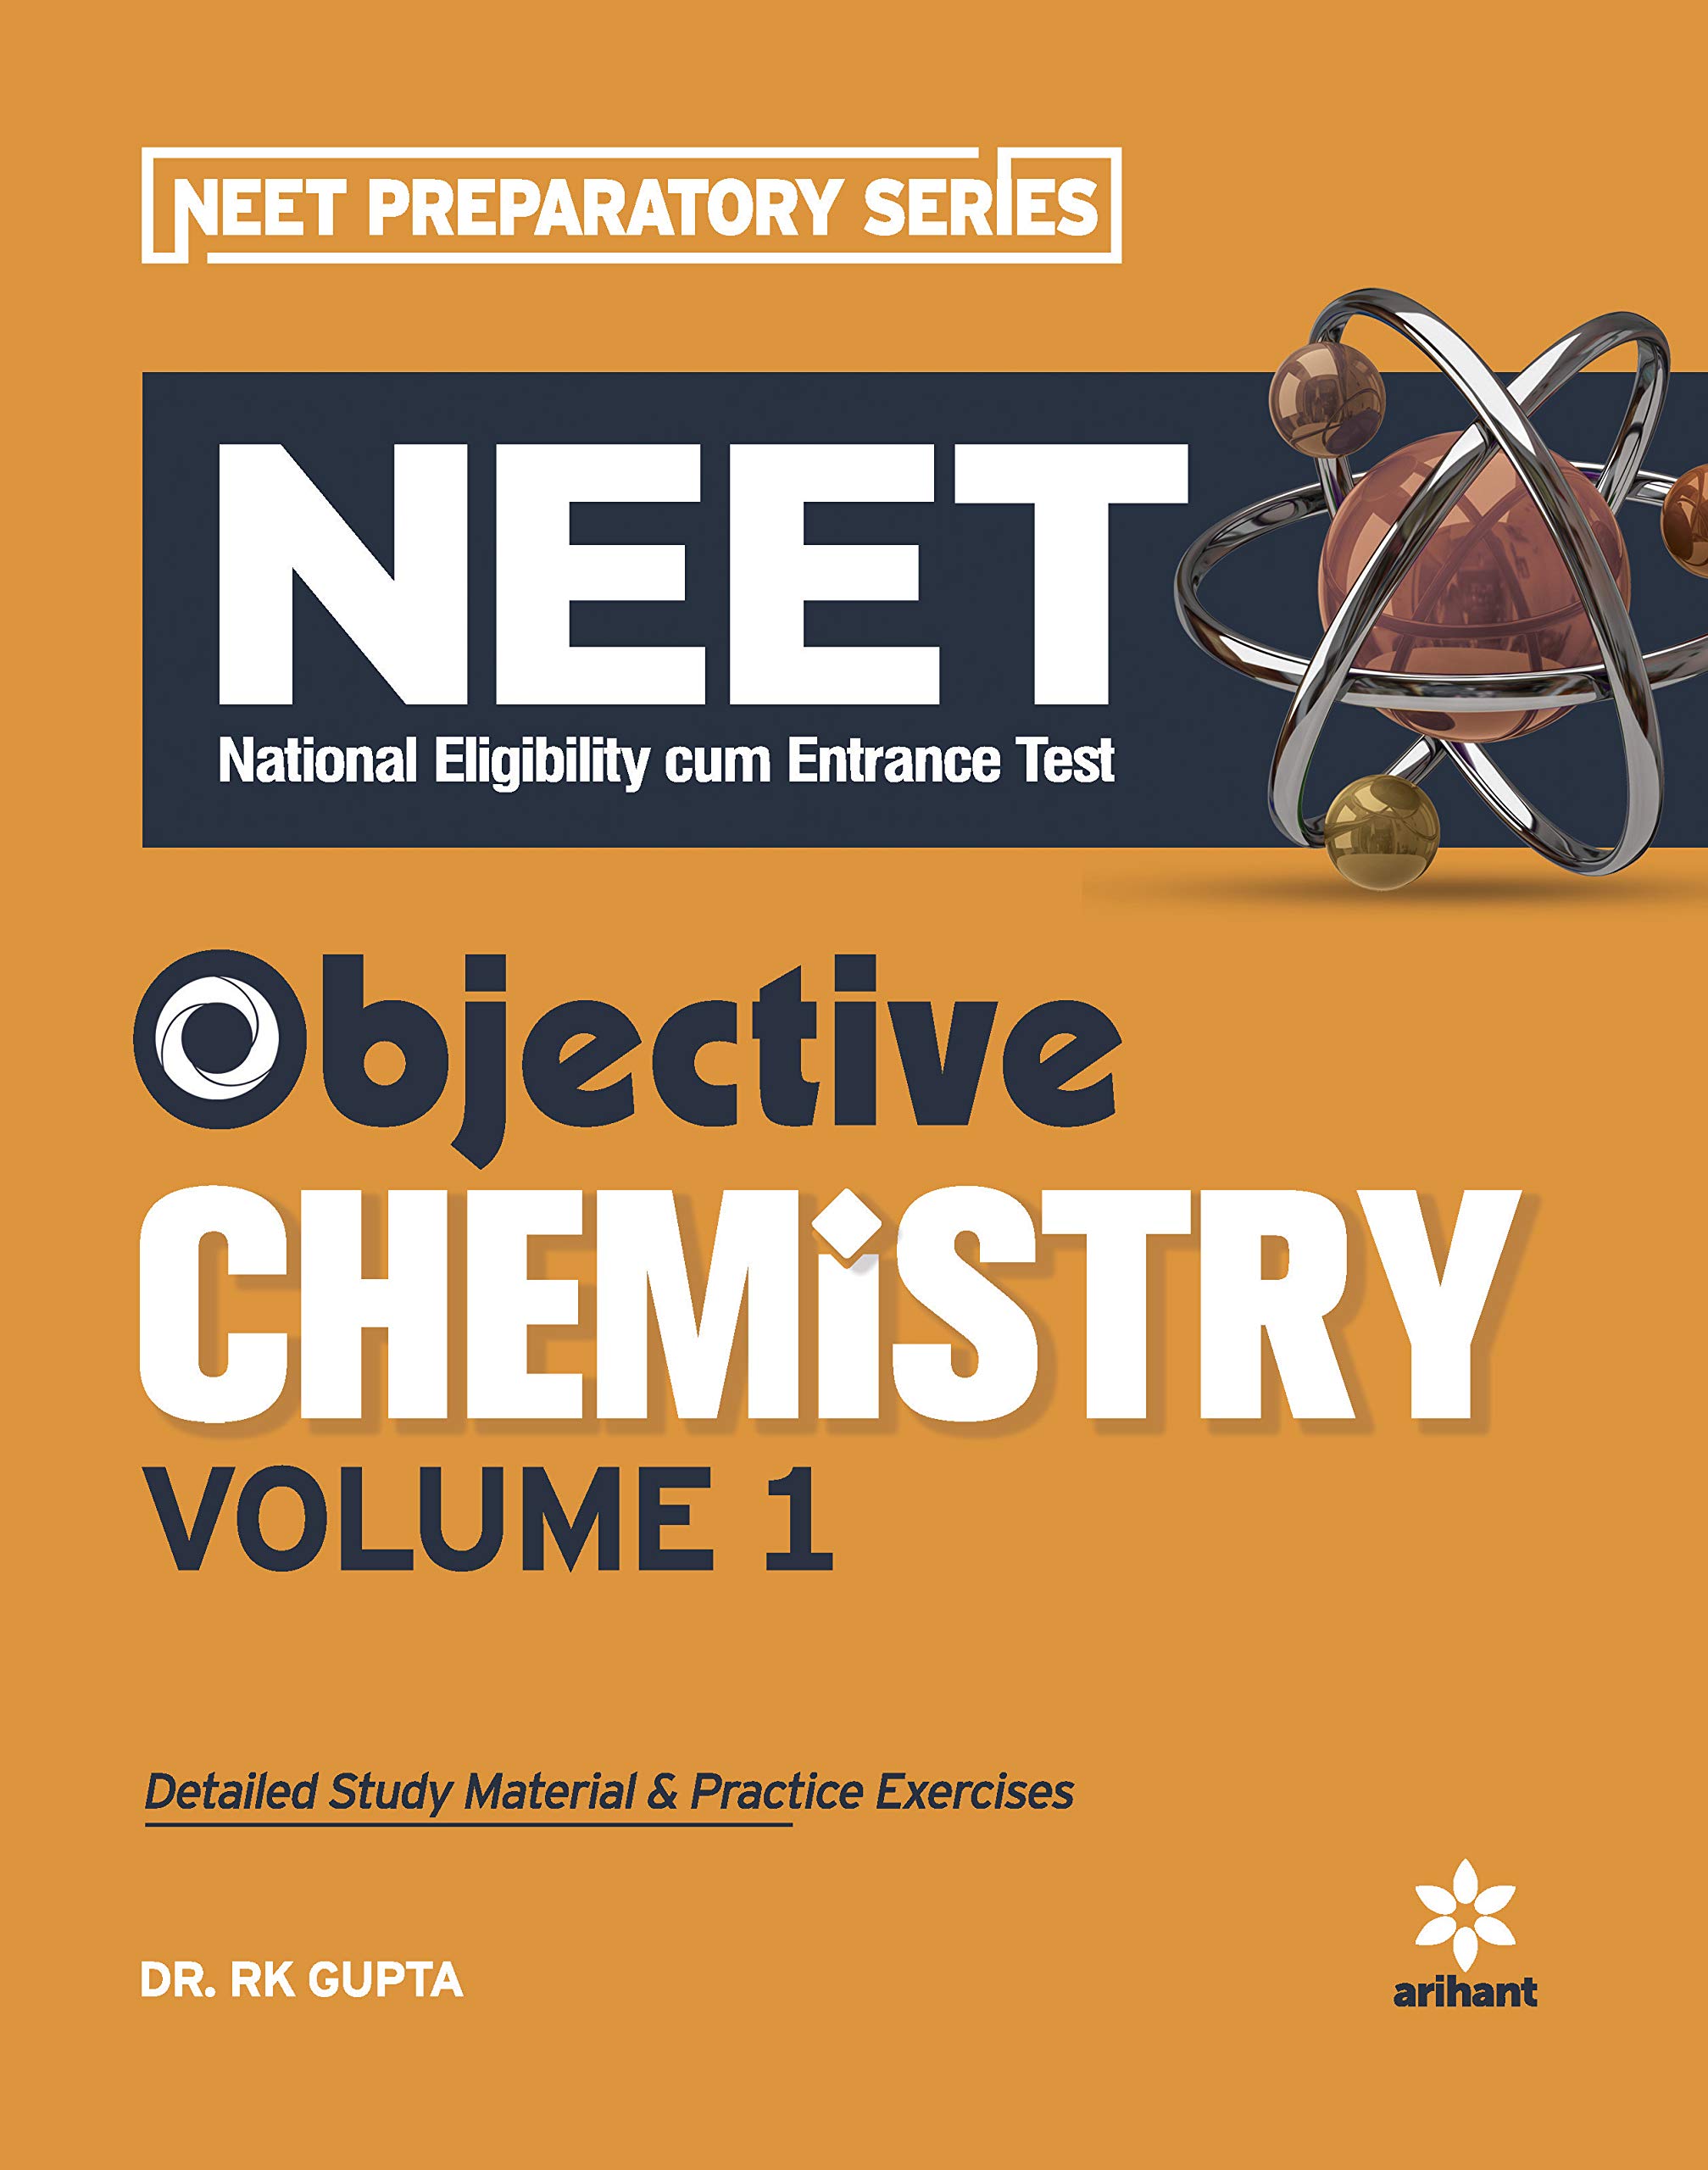 Objective Chemistry Volume 1 by R.K Gupta